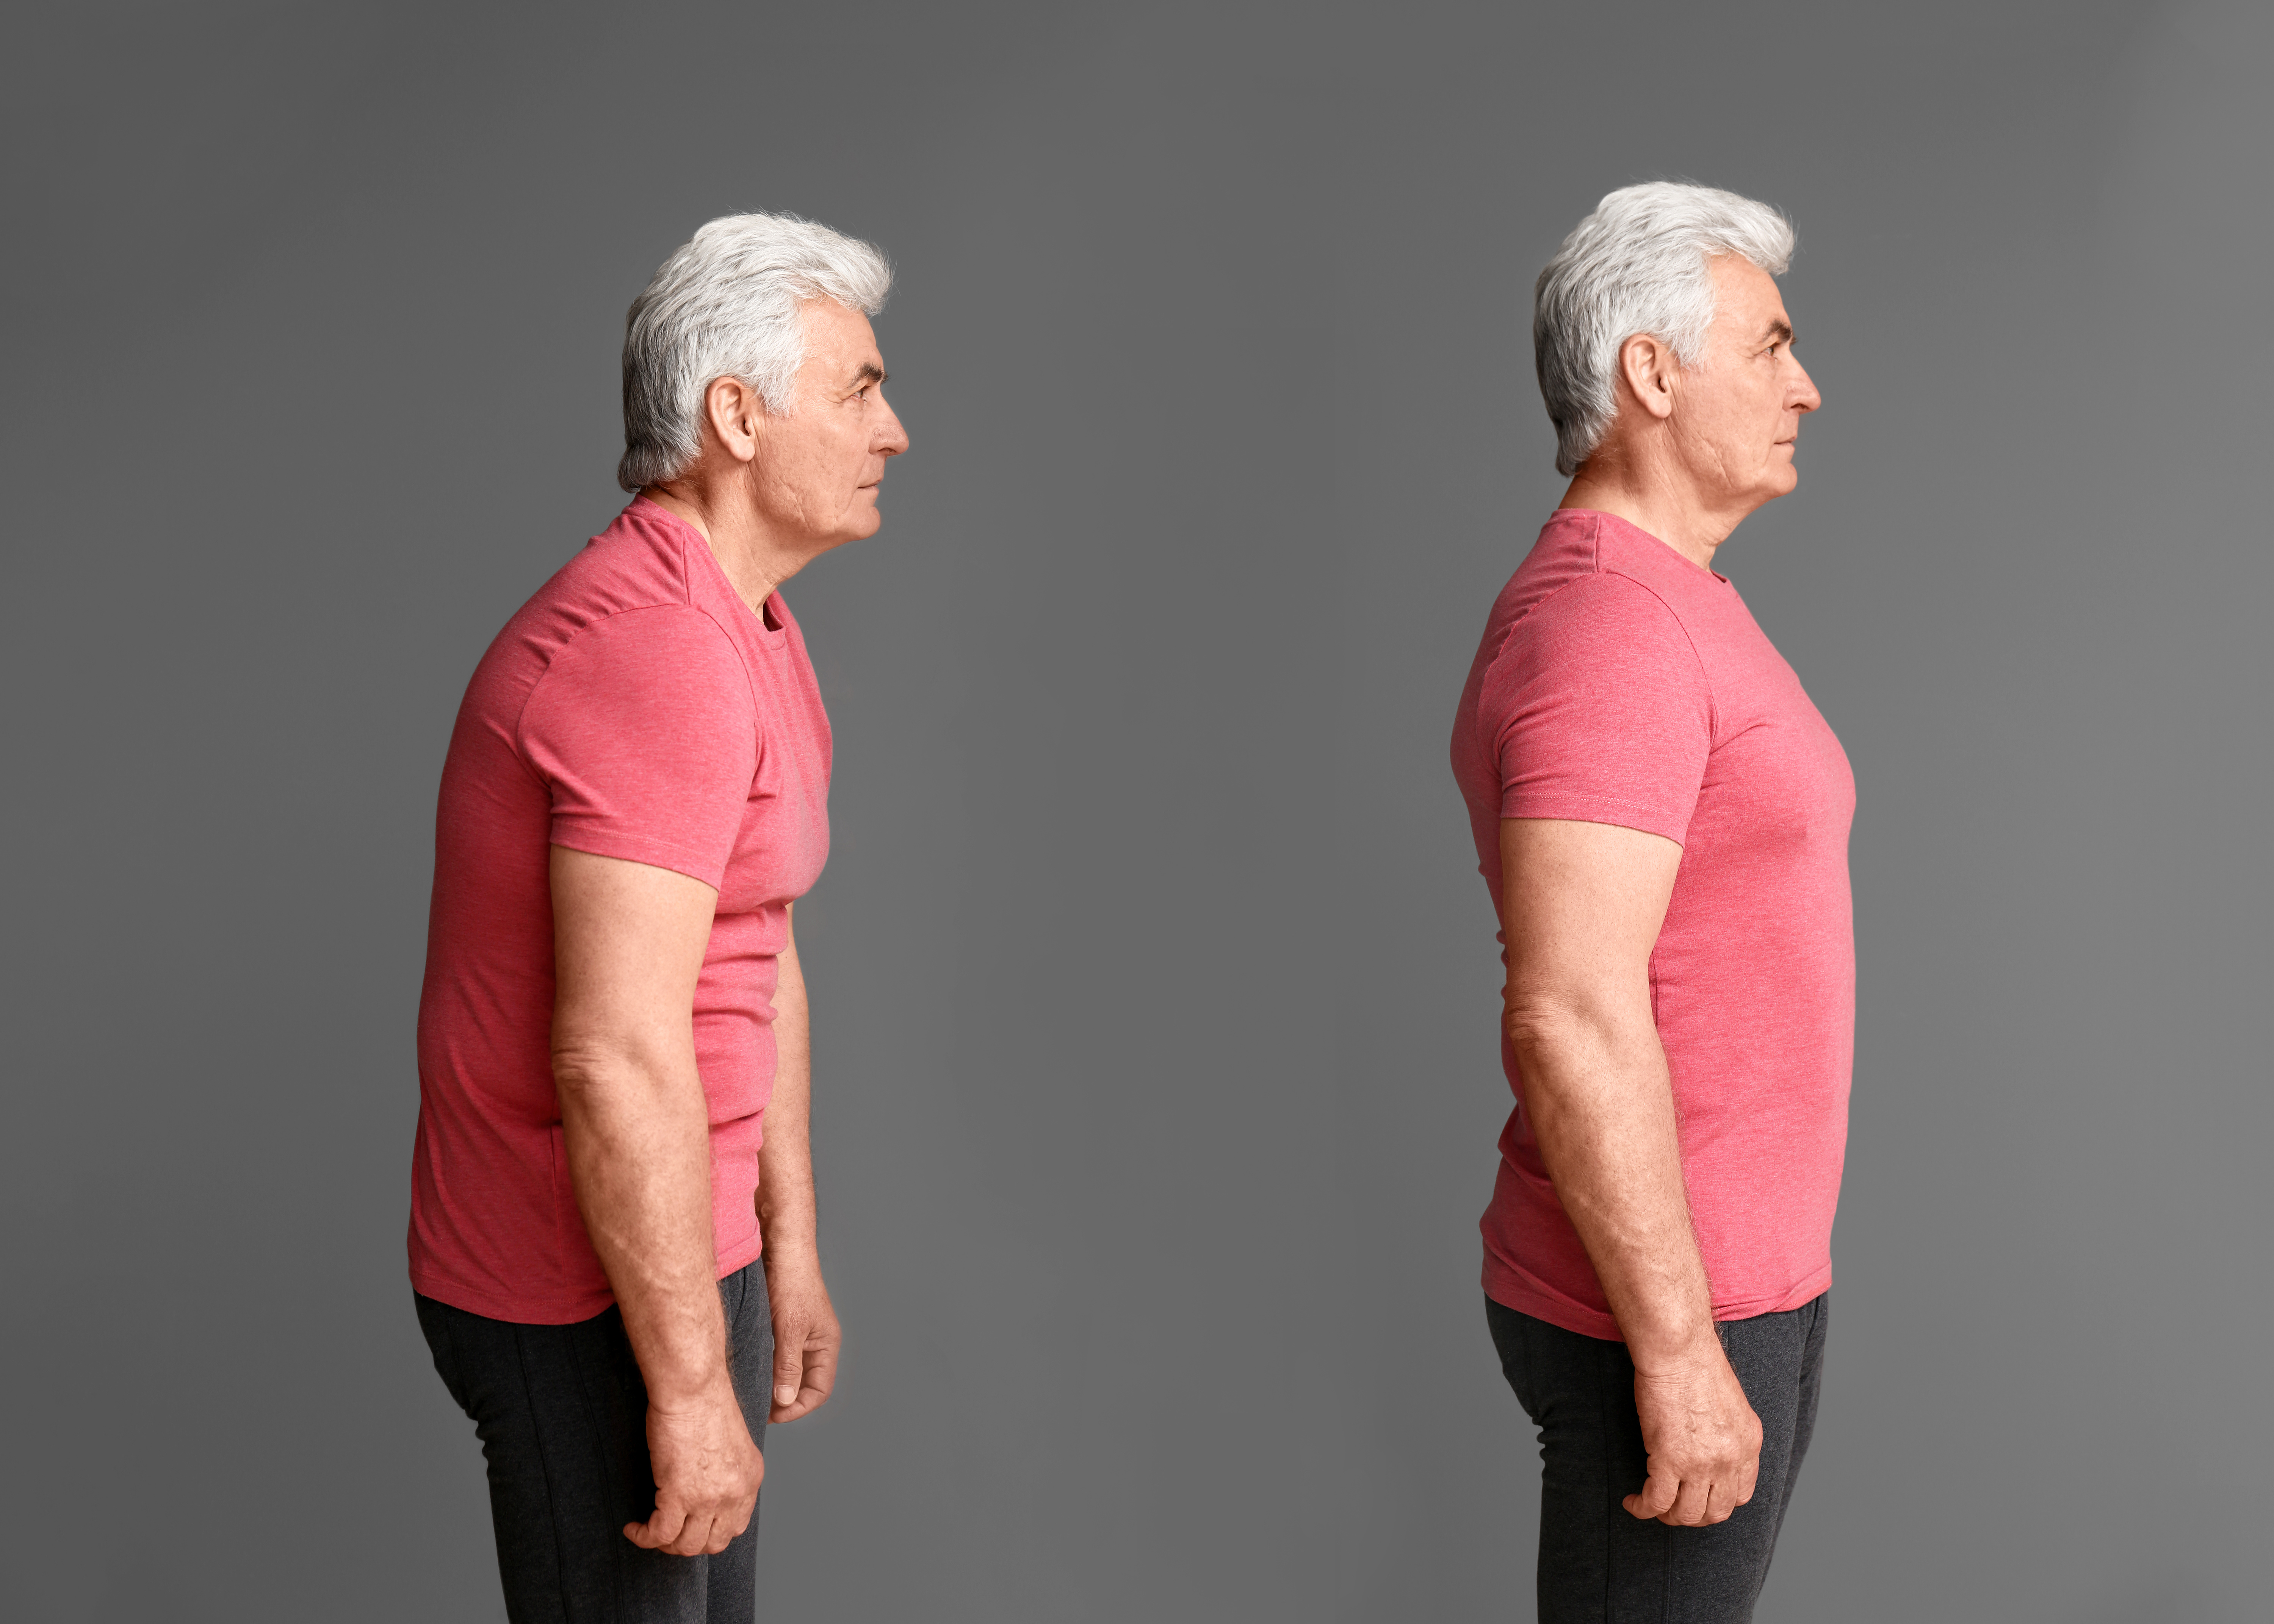 Posture Man Older Compare